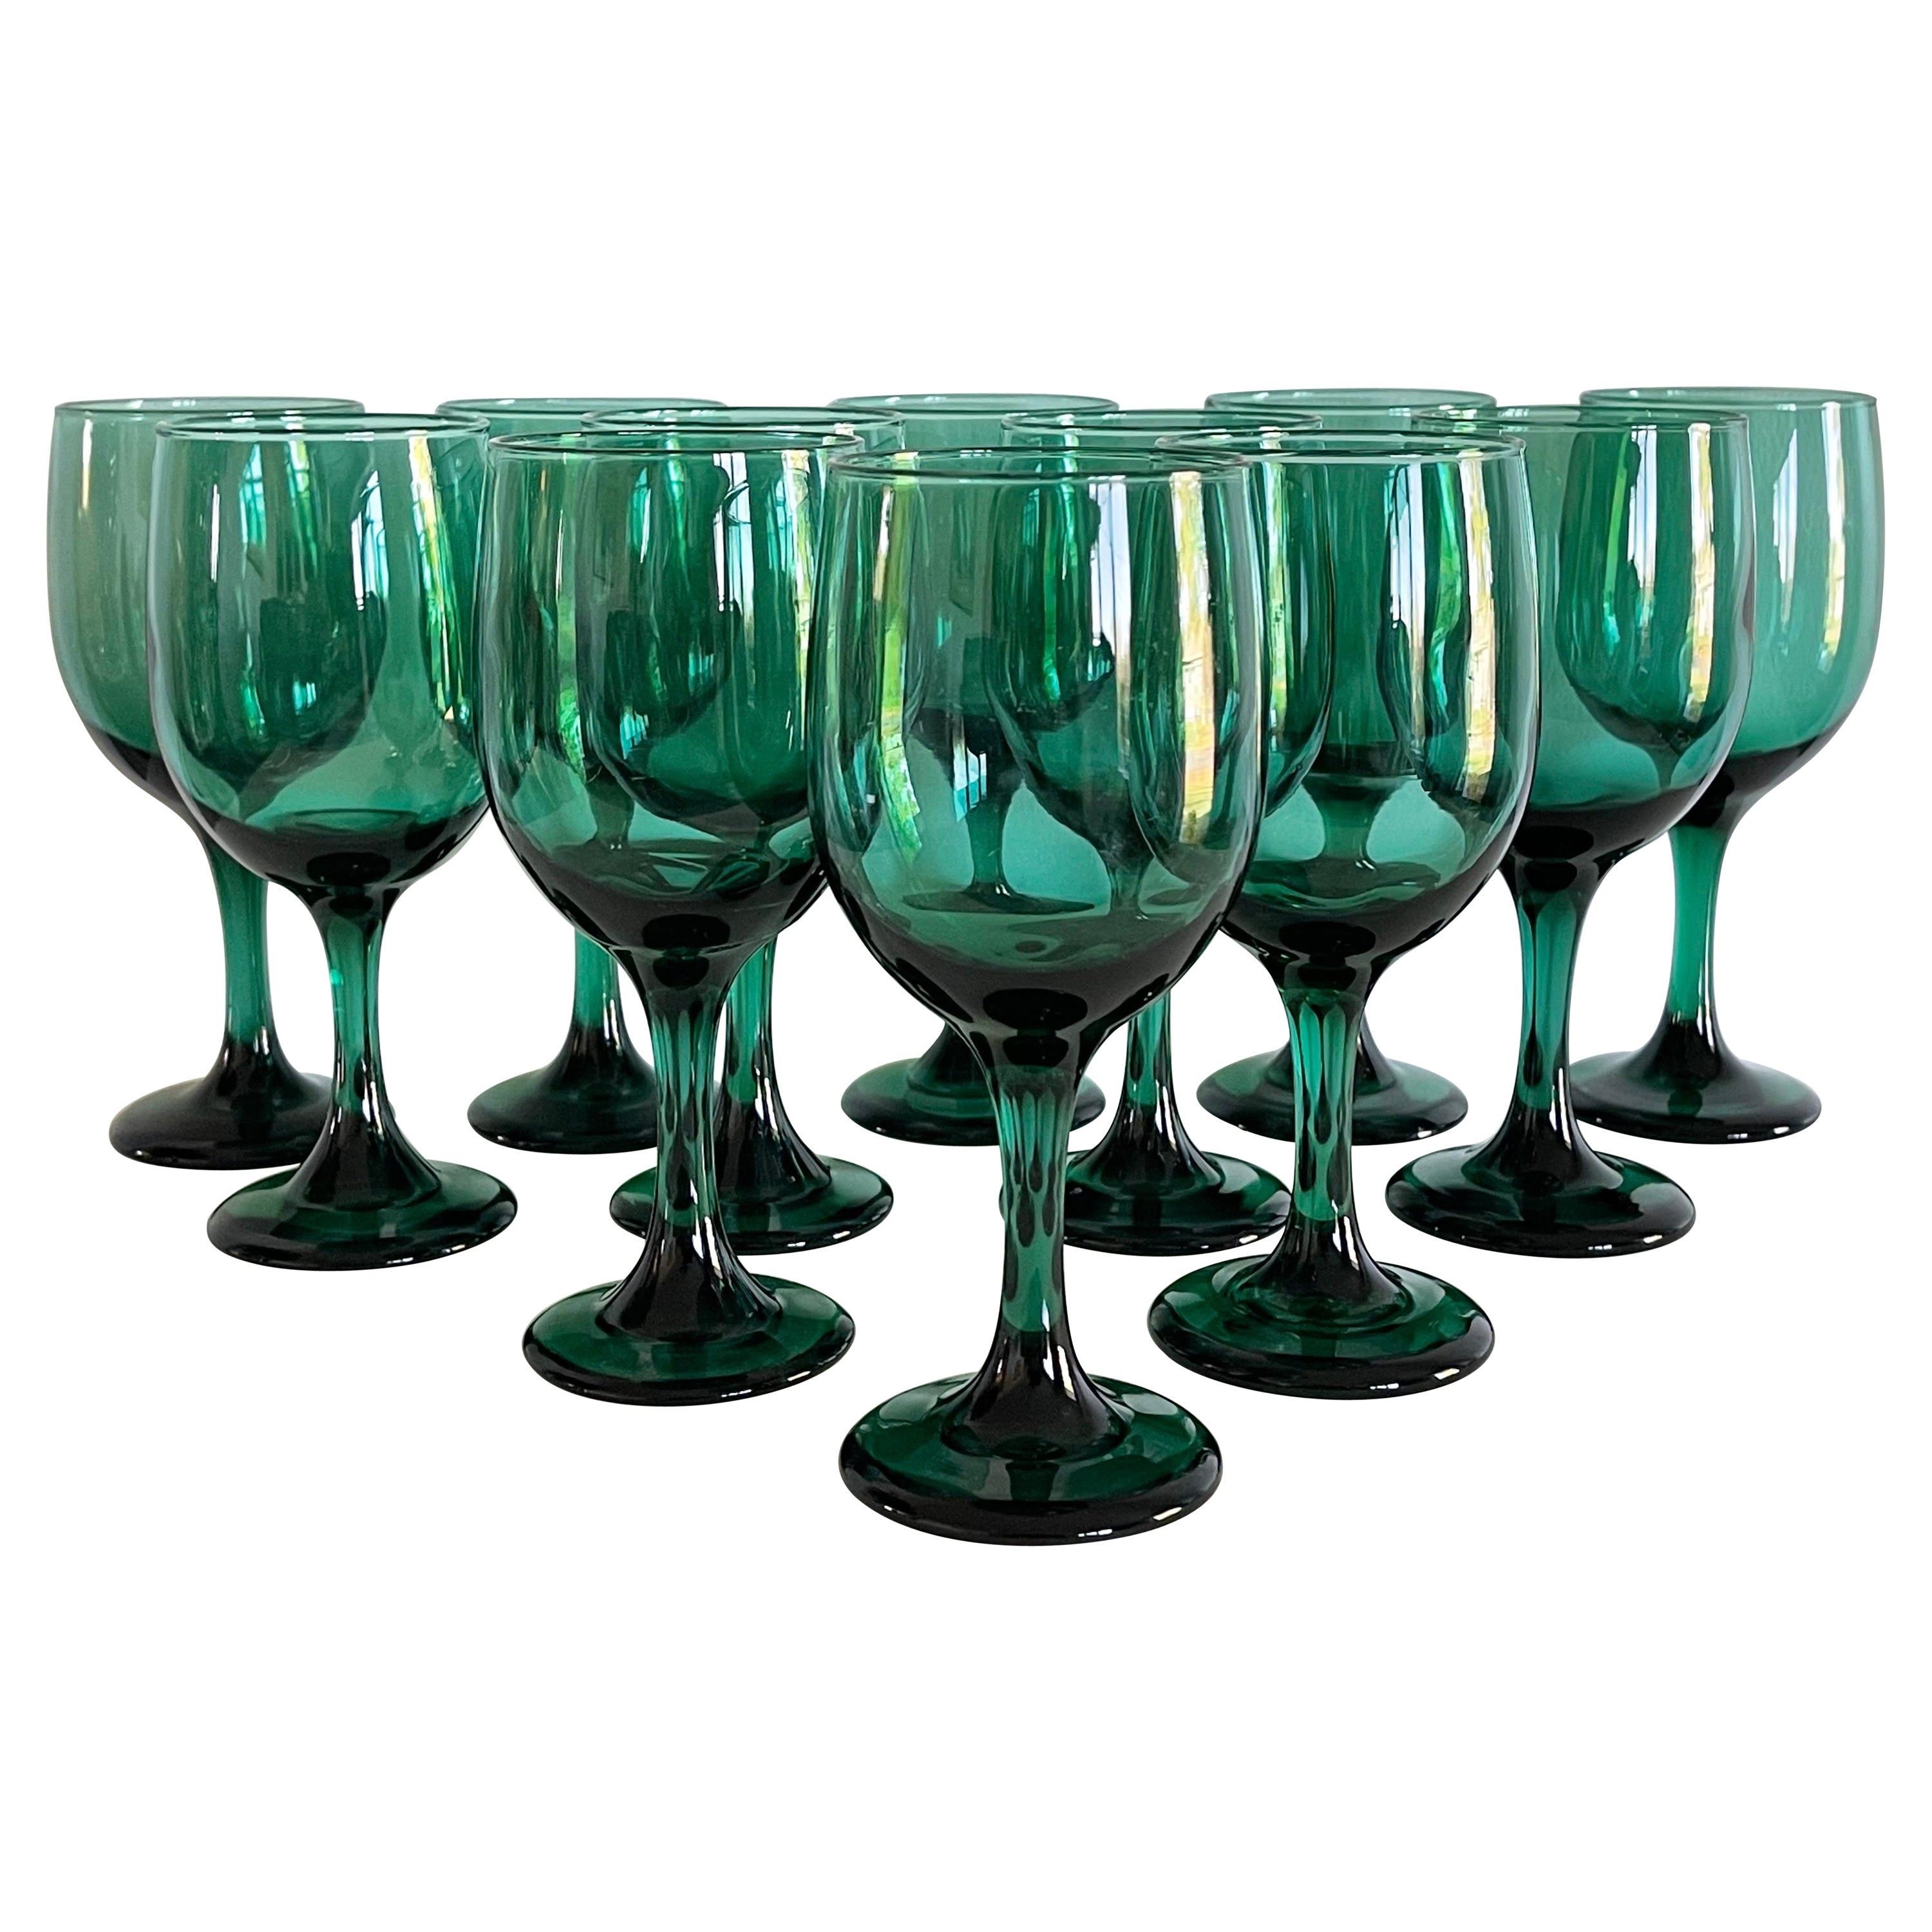 1970s Green Glass Wine Stems, Set of 12